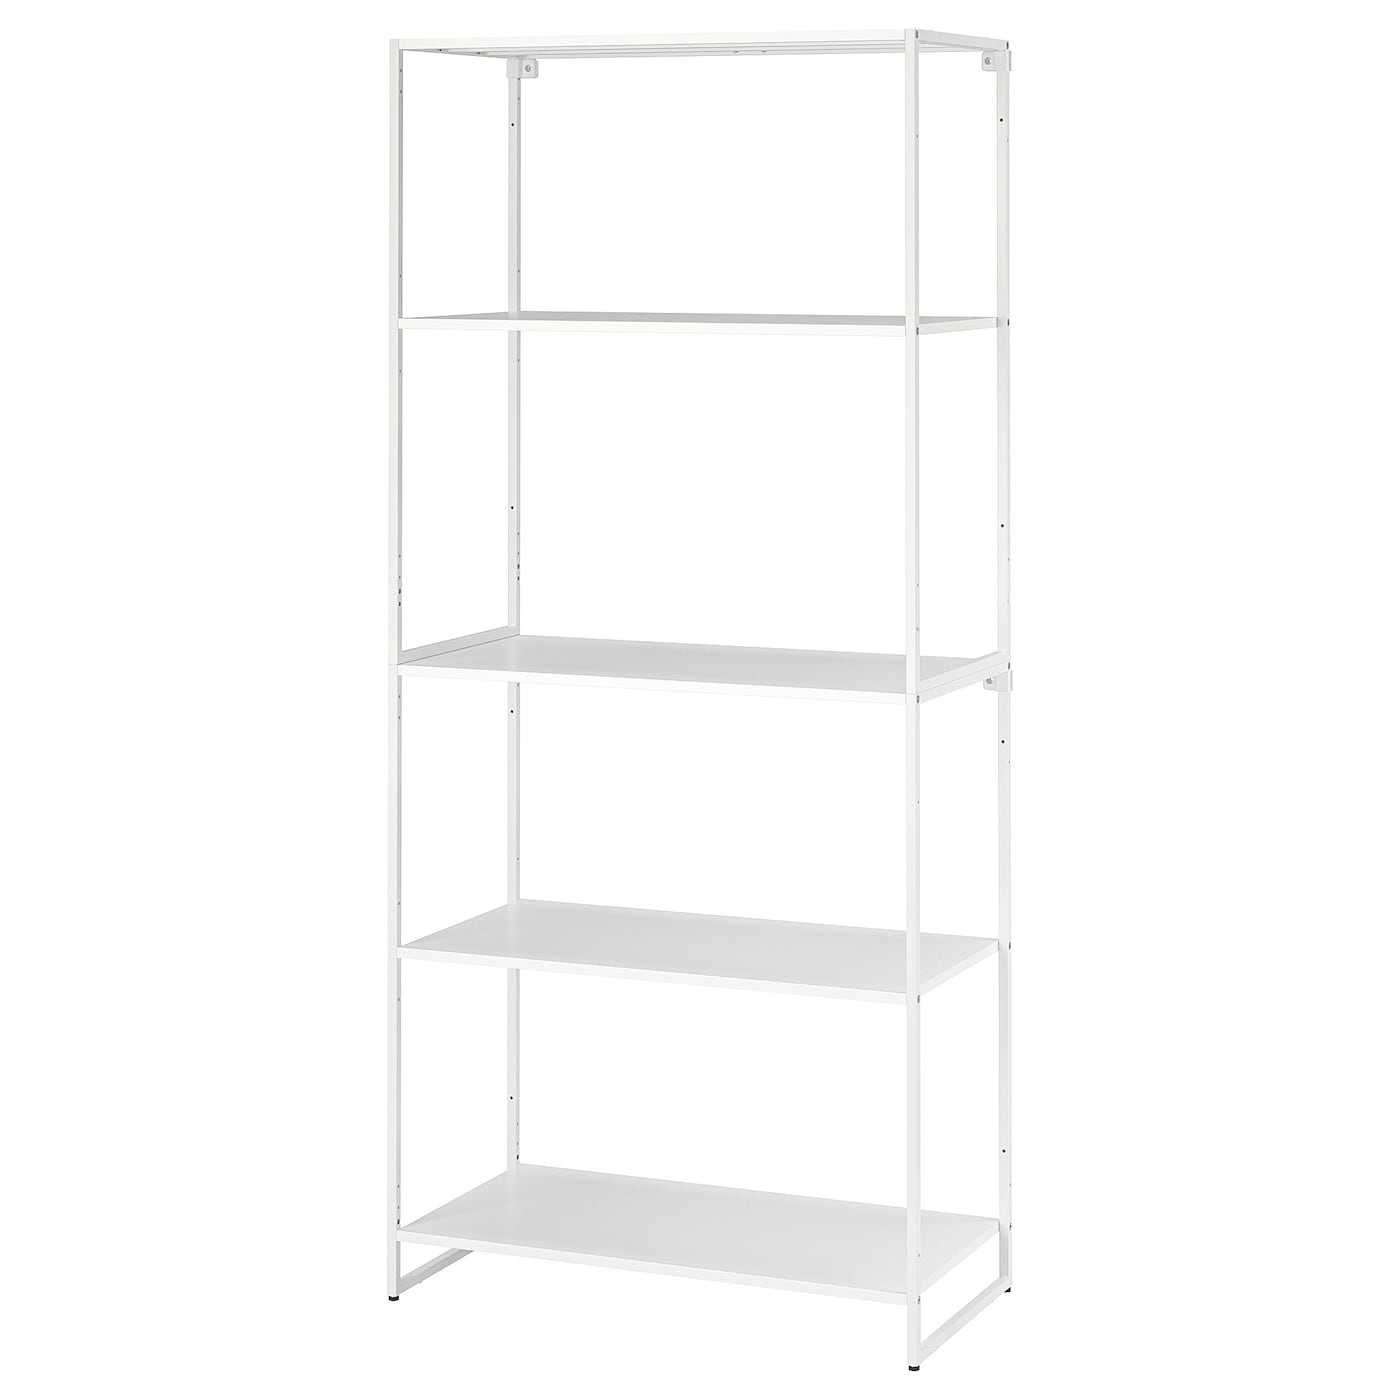 Книжный шкаф - JOSTEIN IKEA/ ЙОСТЕЙН ИКЕА,  180х81 см, белый